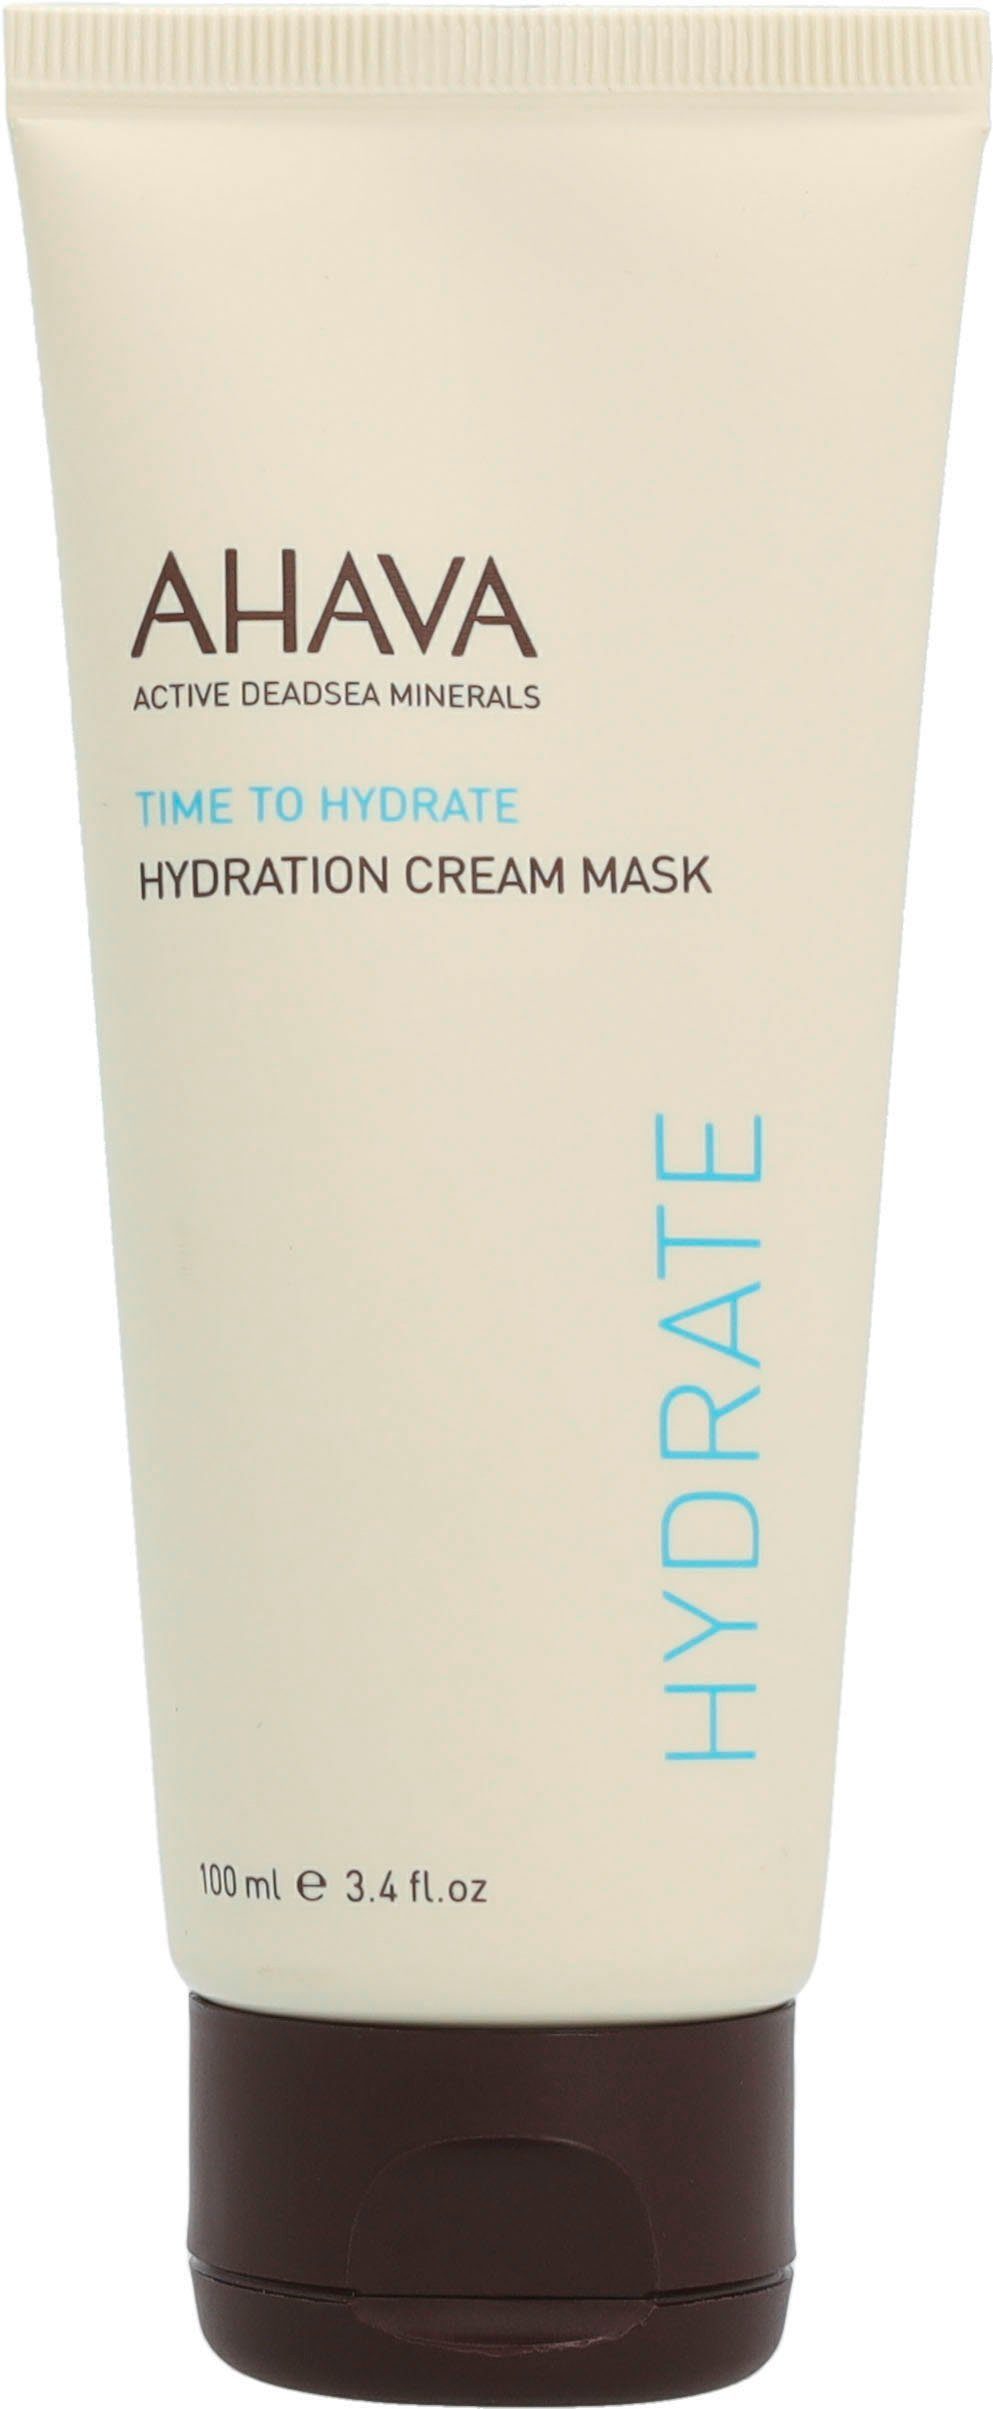 Hydrate Mask Cream Hydration Time Gesichtsmaske To AHAVA